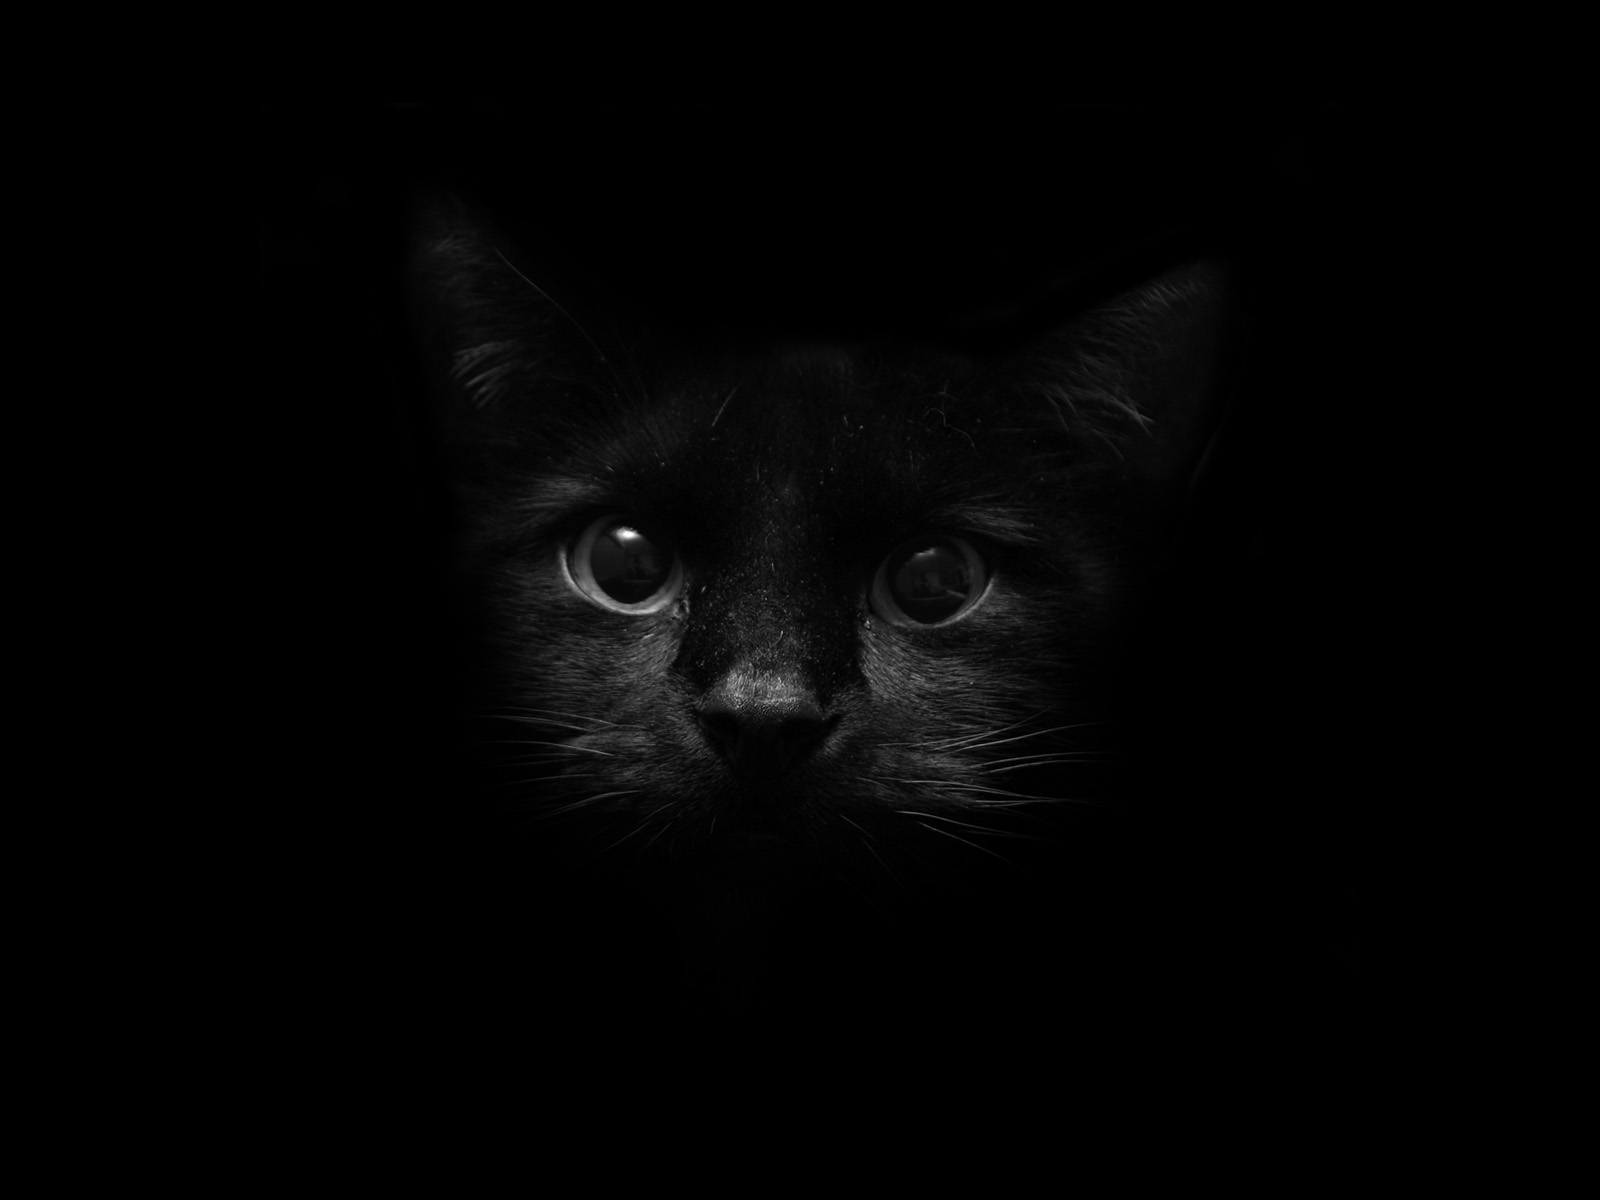 wallpaperew: Black Cat wallpaper